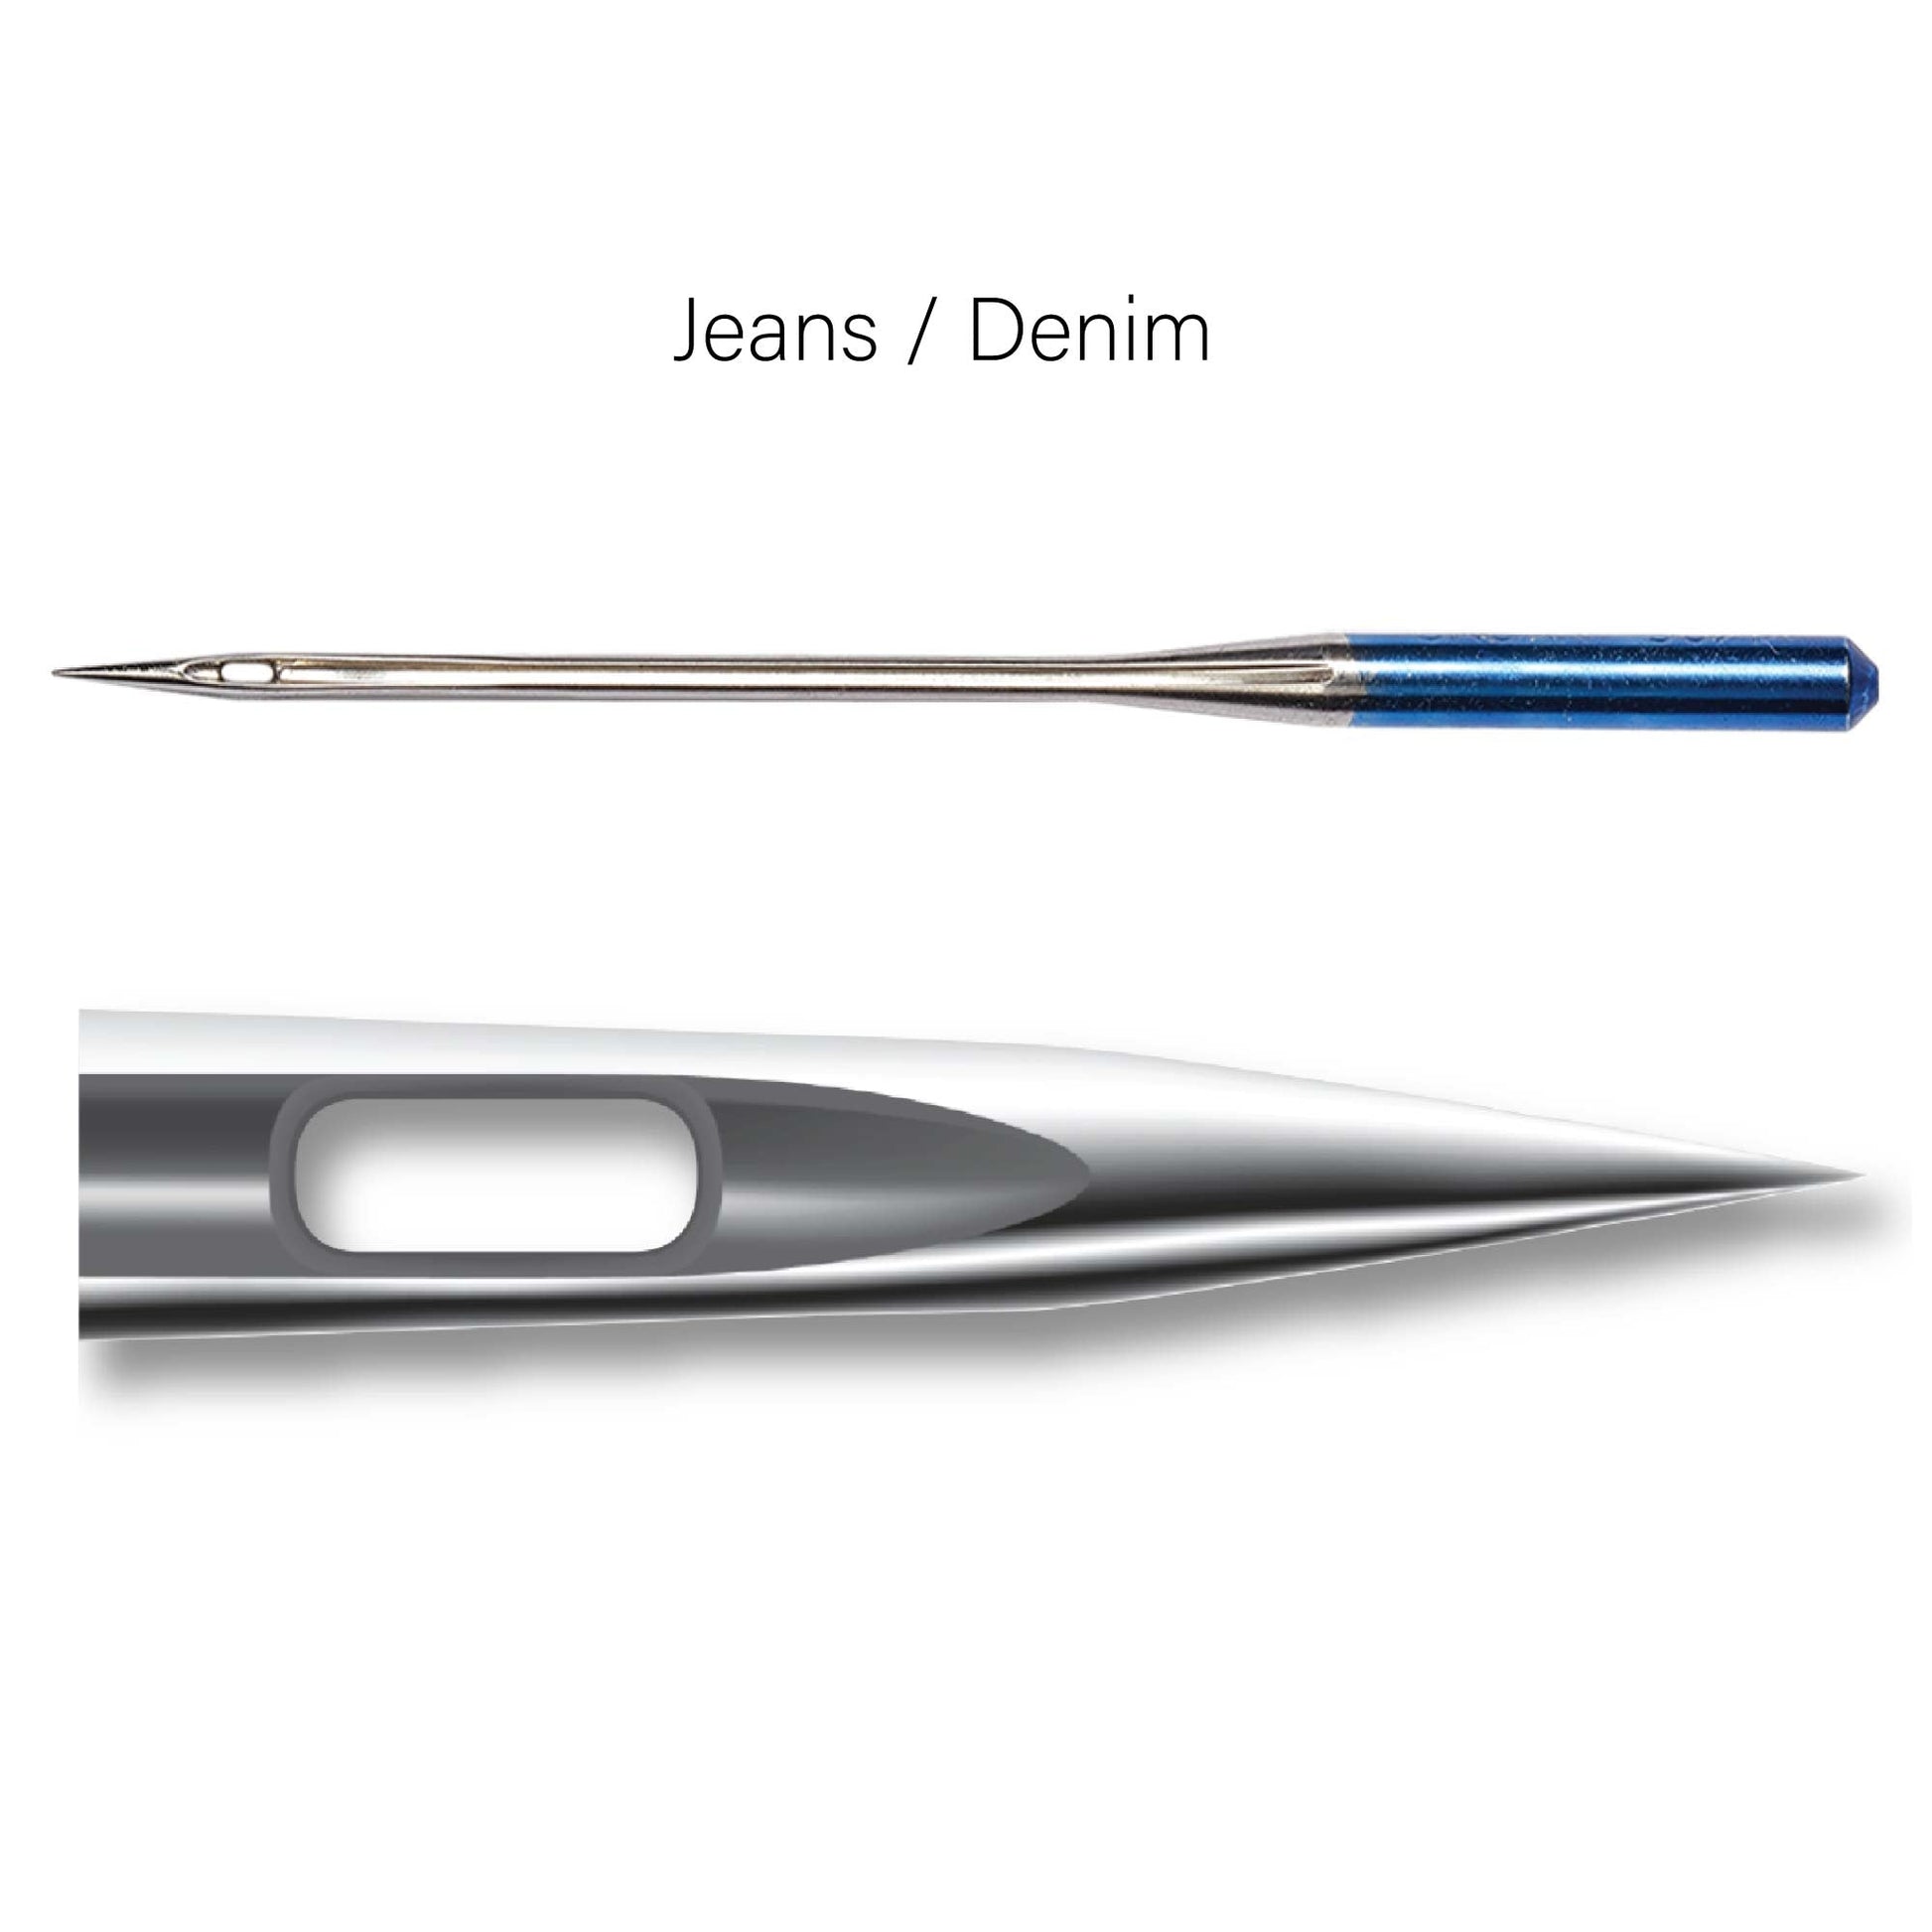 Klasse Jeans Denim Sewing Machine Needles 6 Pack Assorted Sizes 100/110